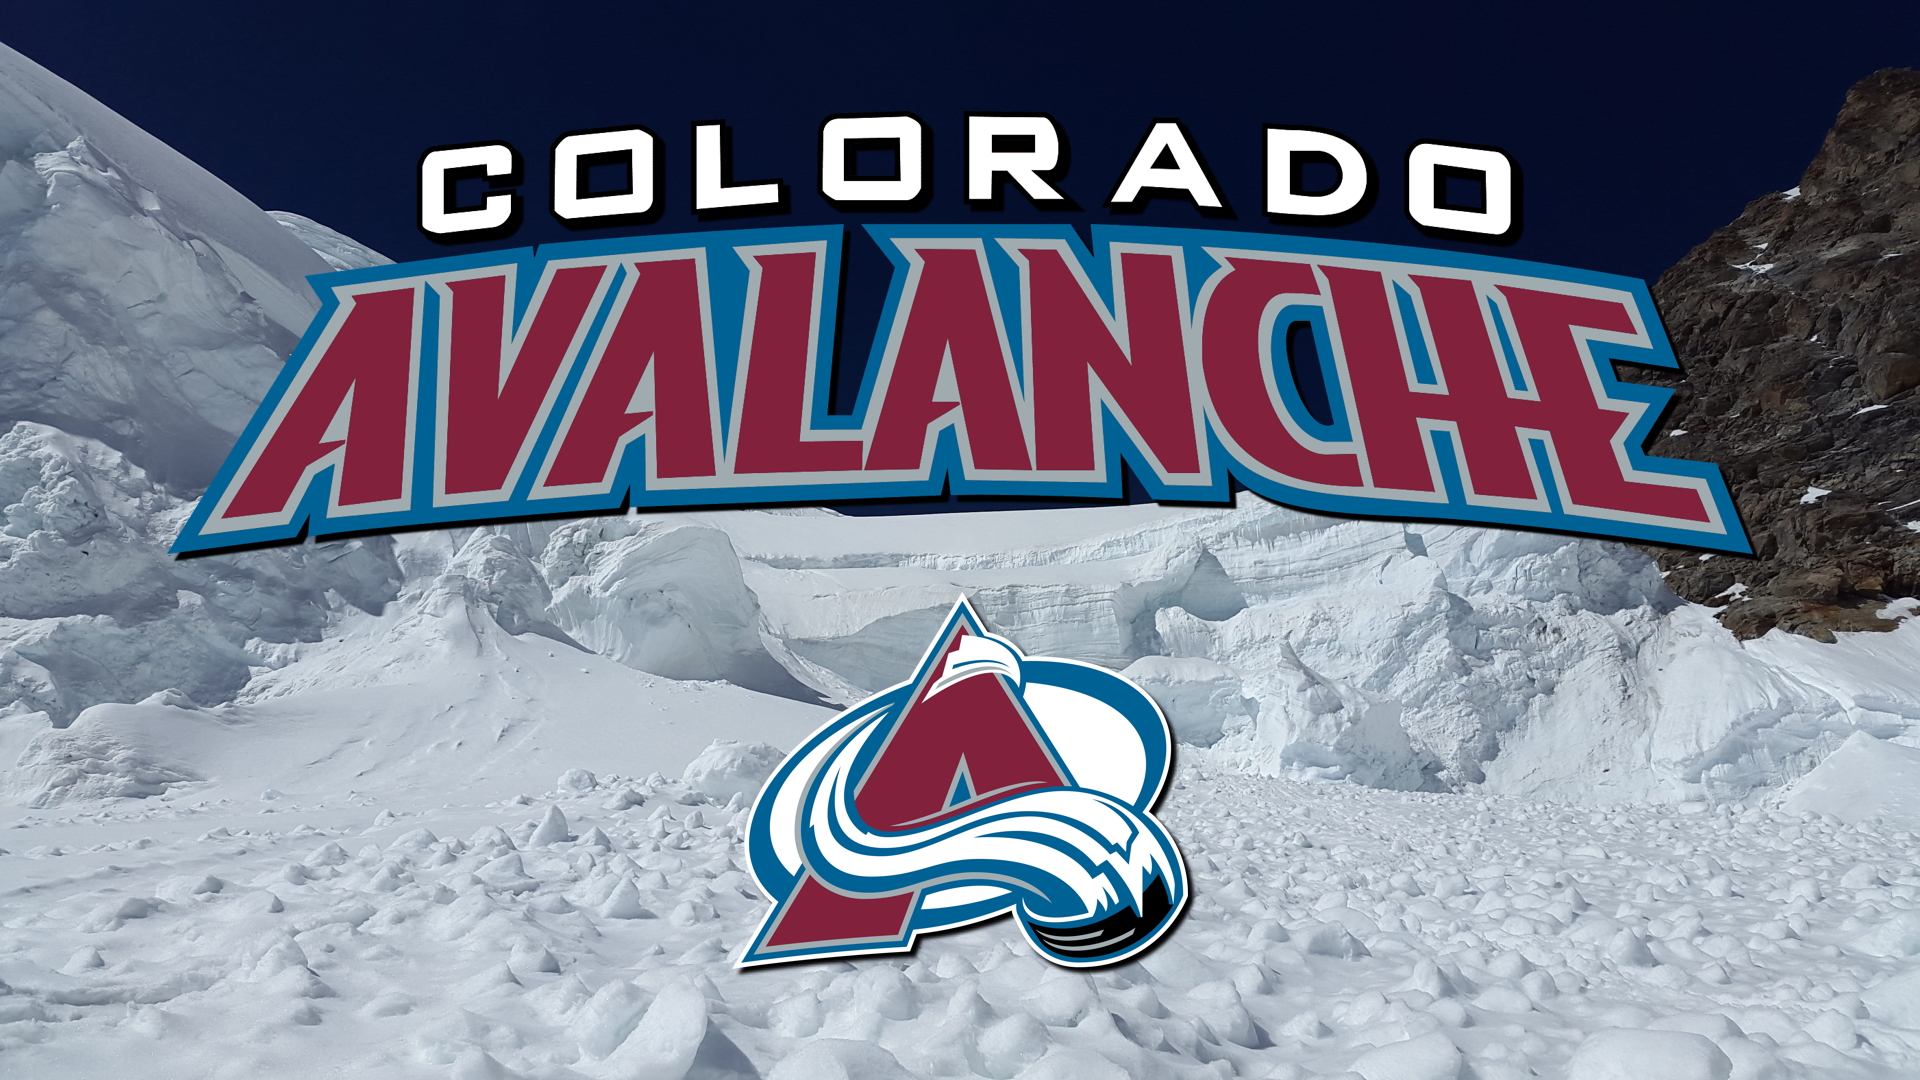 General 1920x1080 Colorado Avalanche NHL ice hockey Colorado Denver logo snow digital art